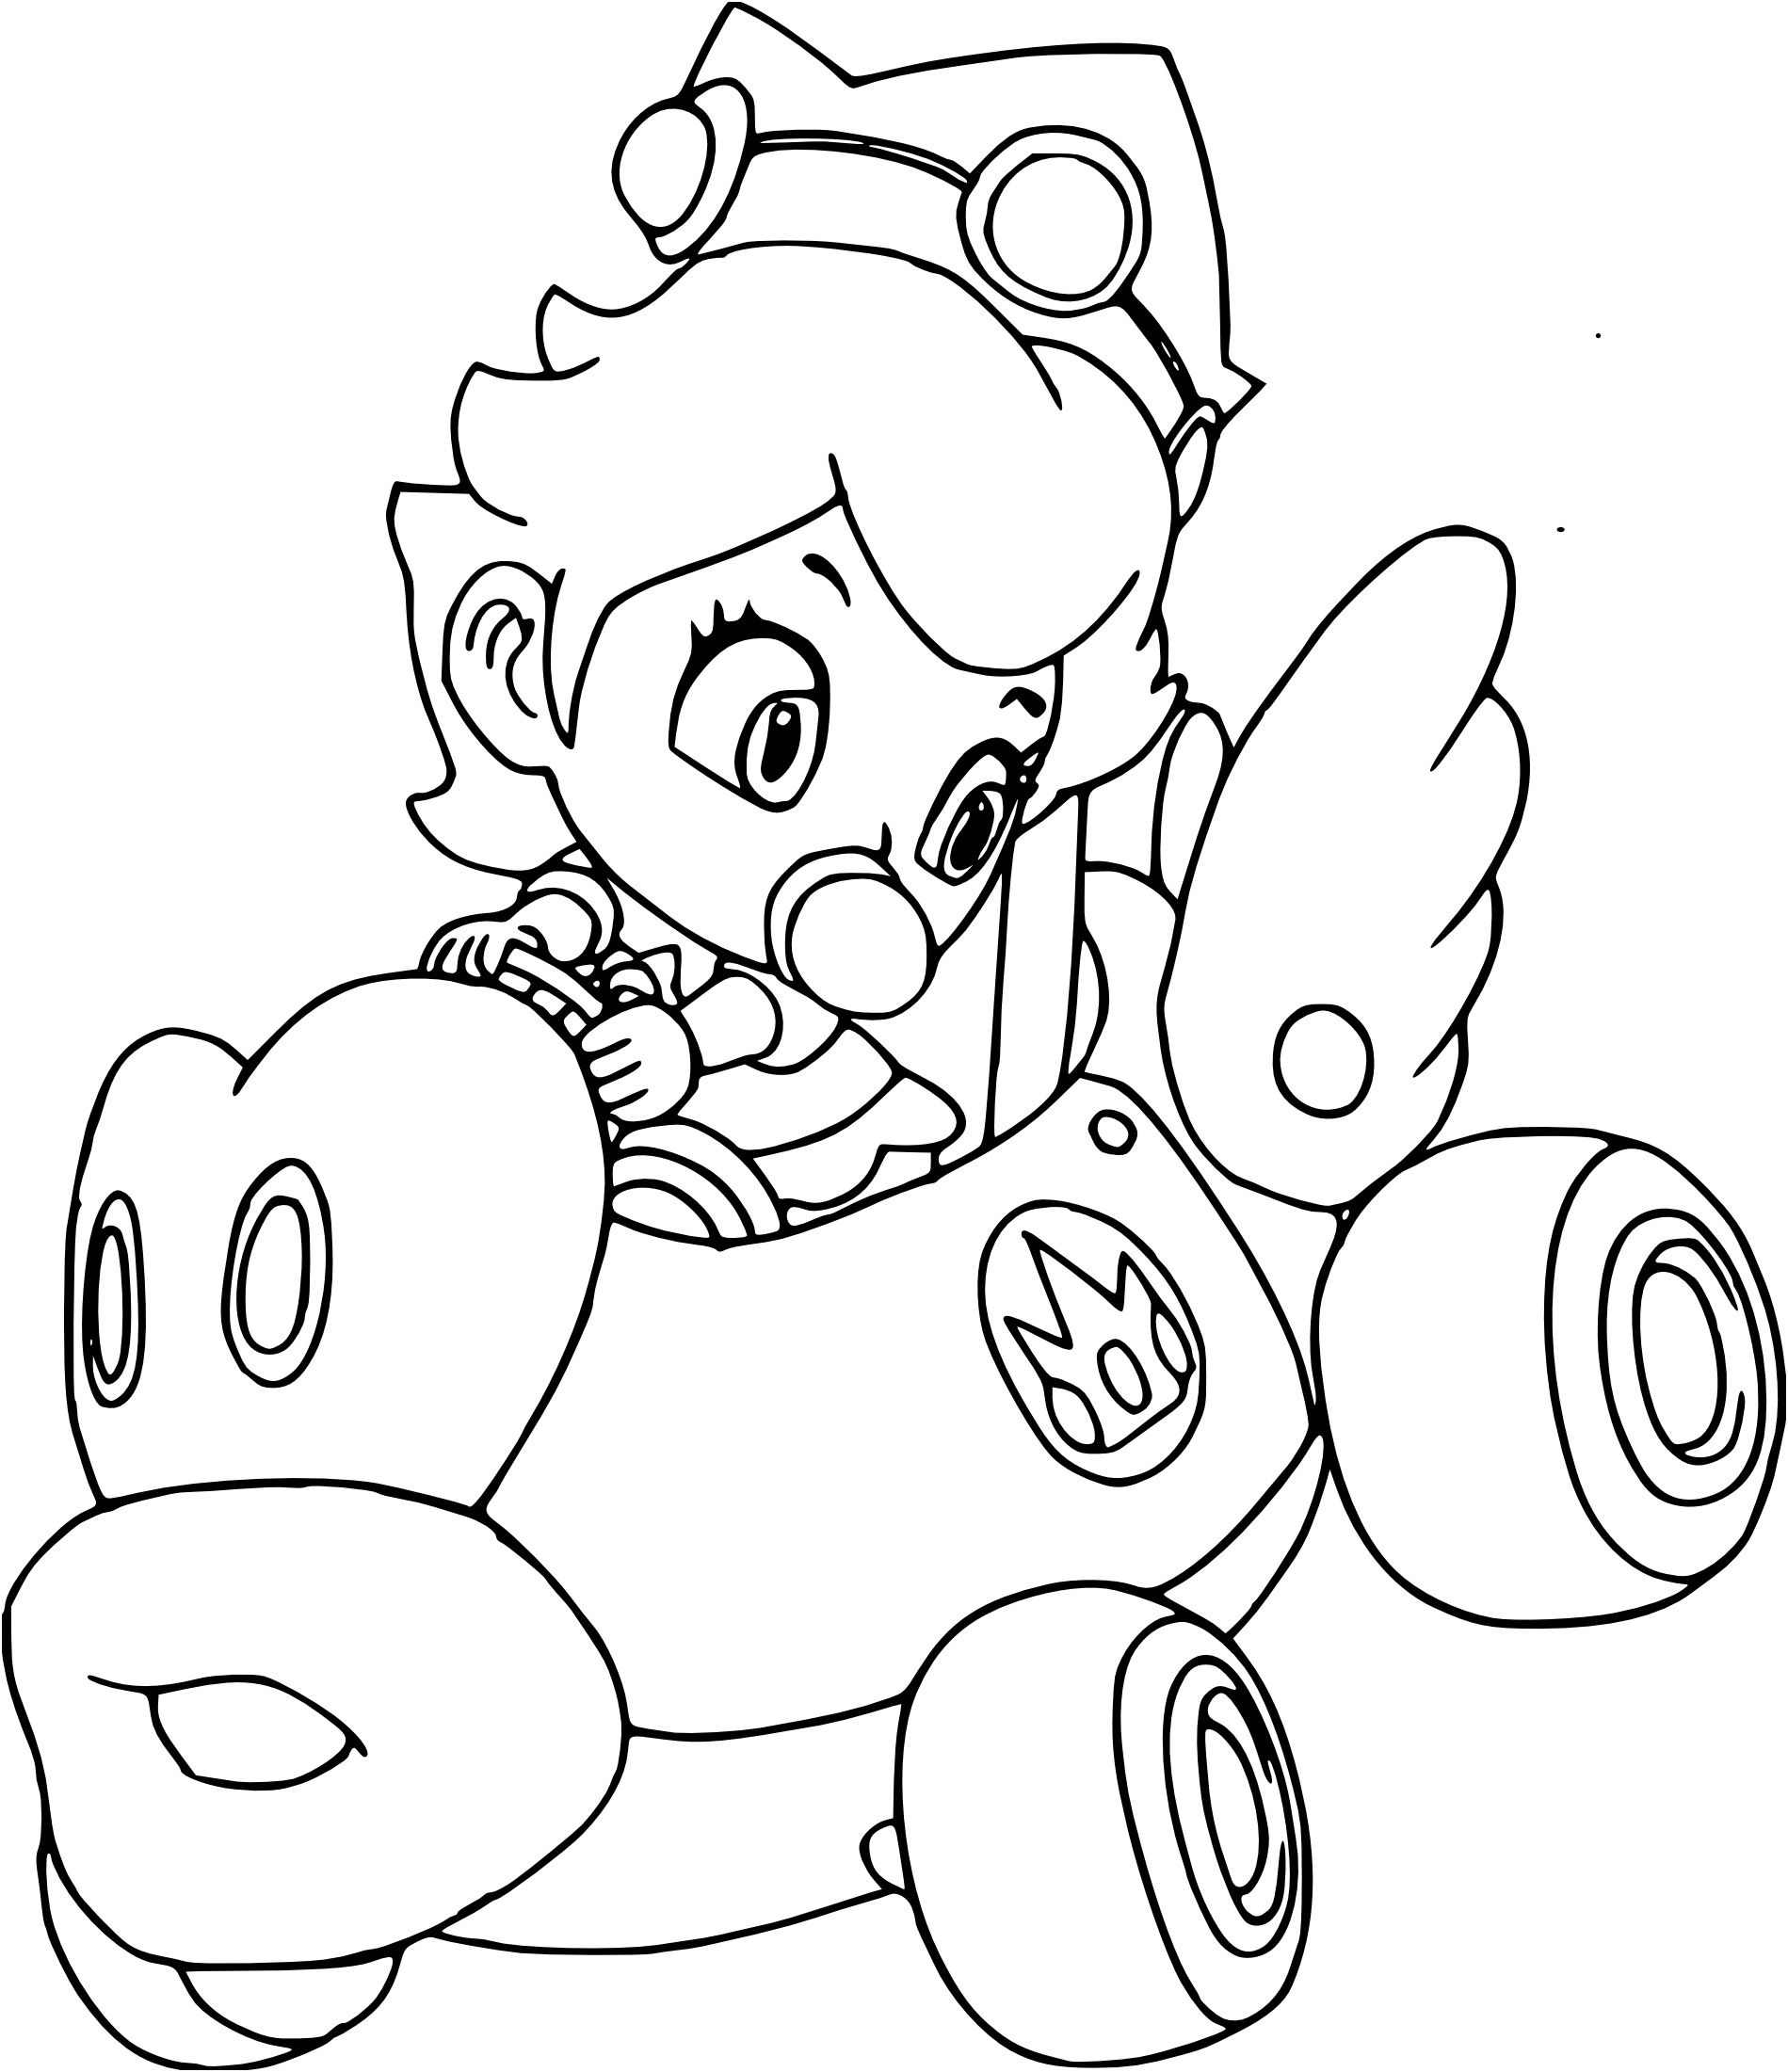 Coloriage Mario Kart Nice Coloriage Peach Mario Kart à Imprimer